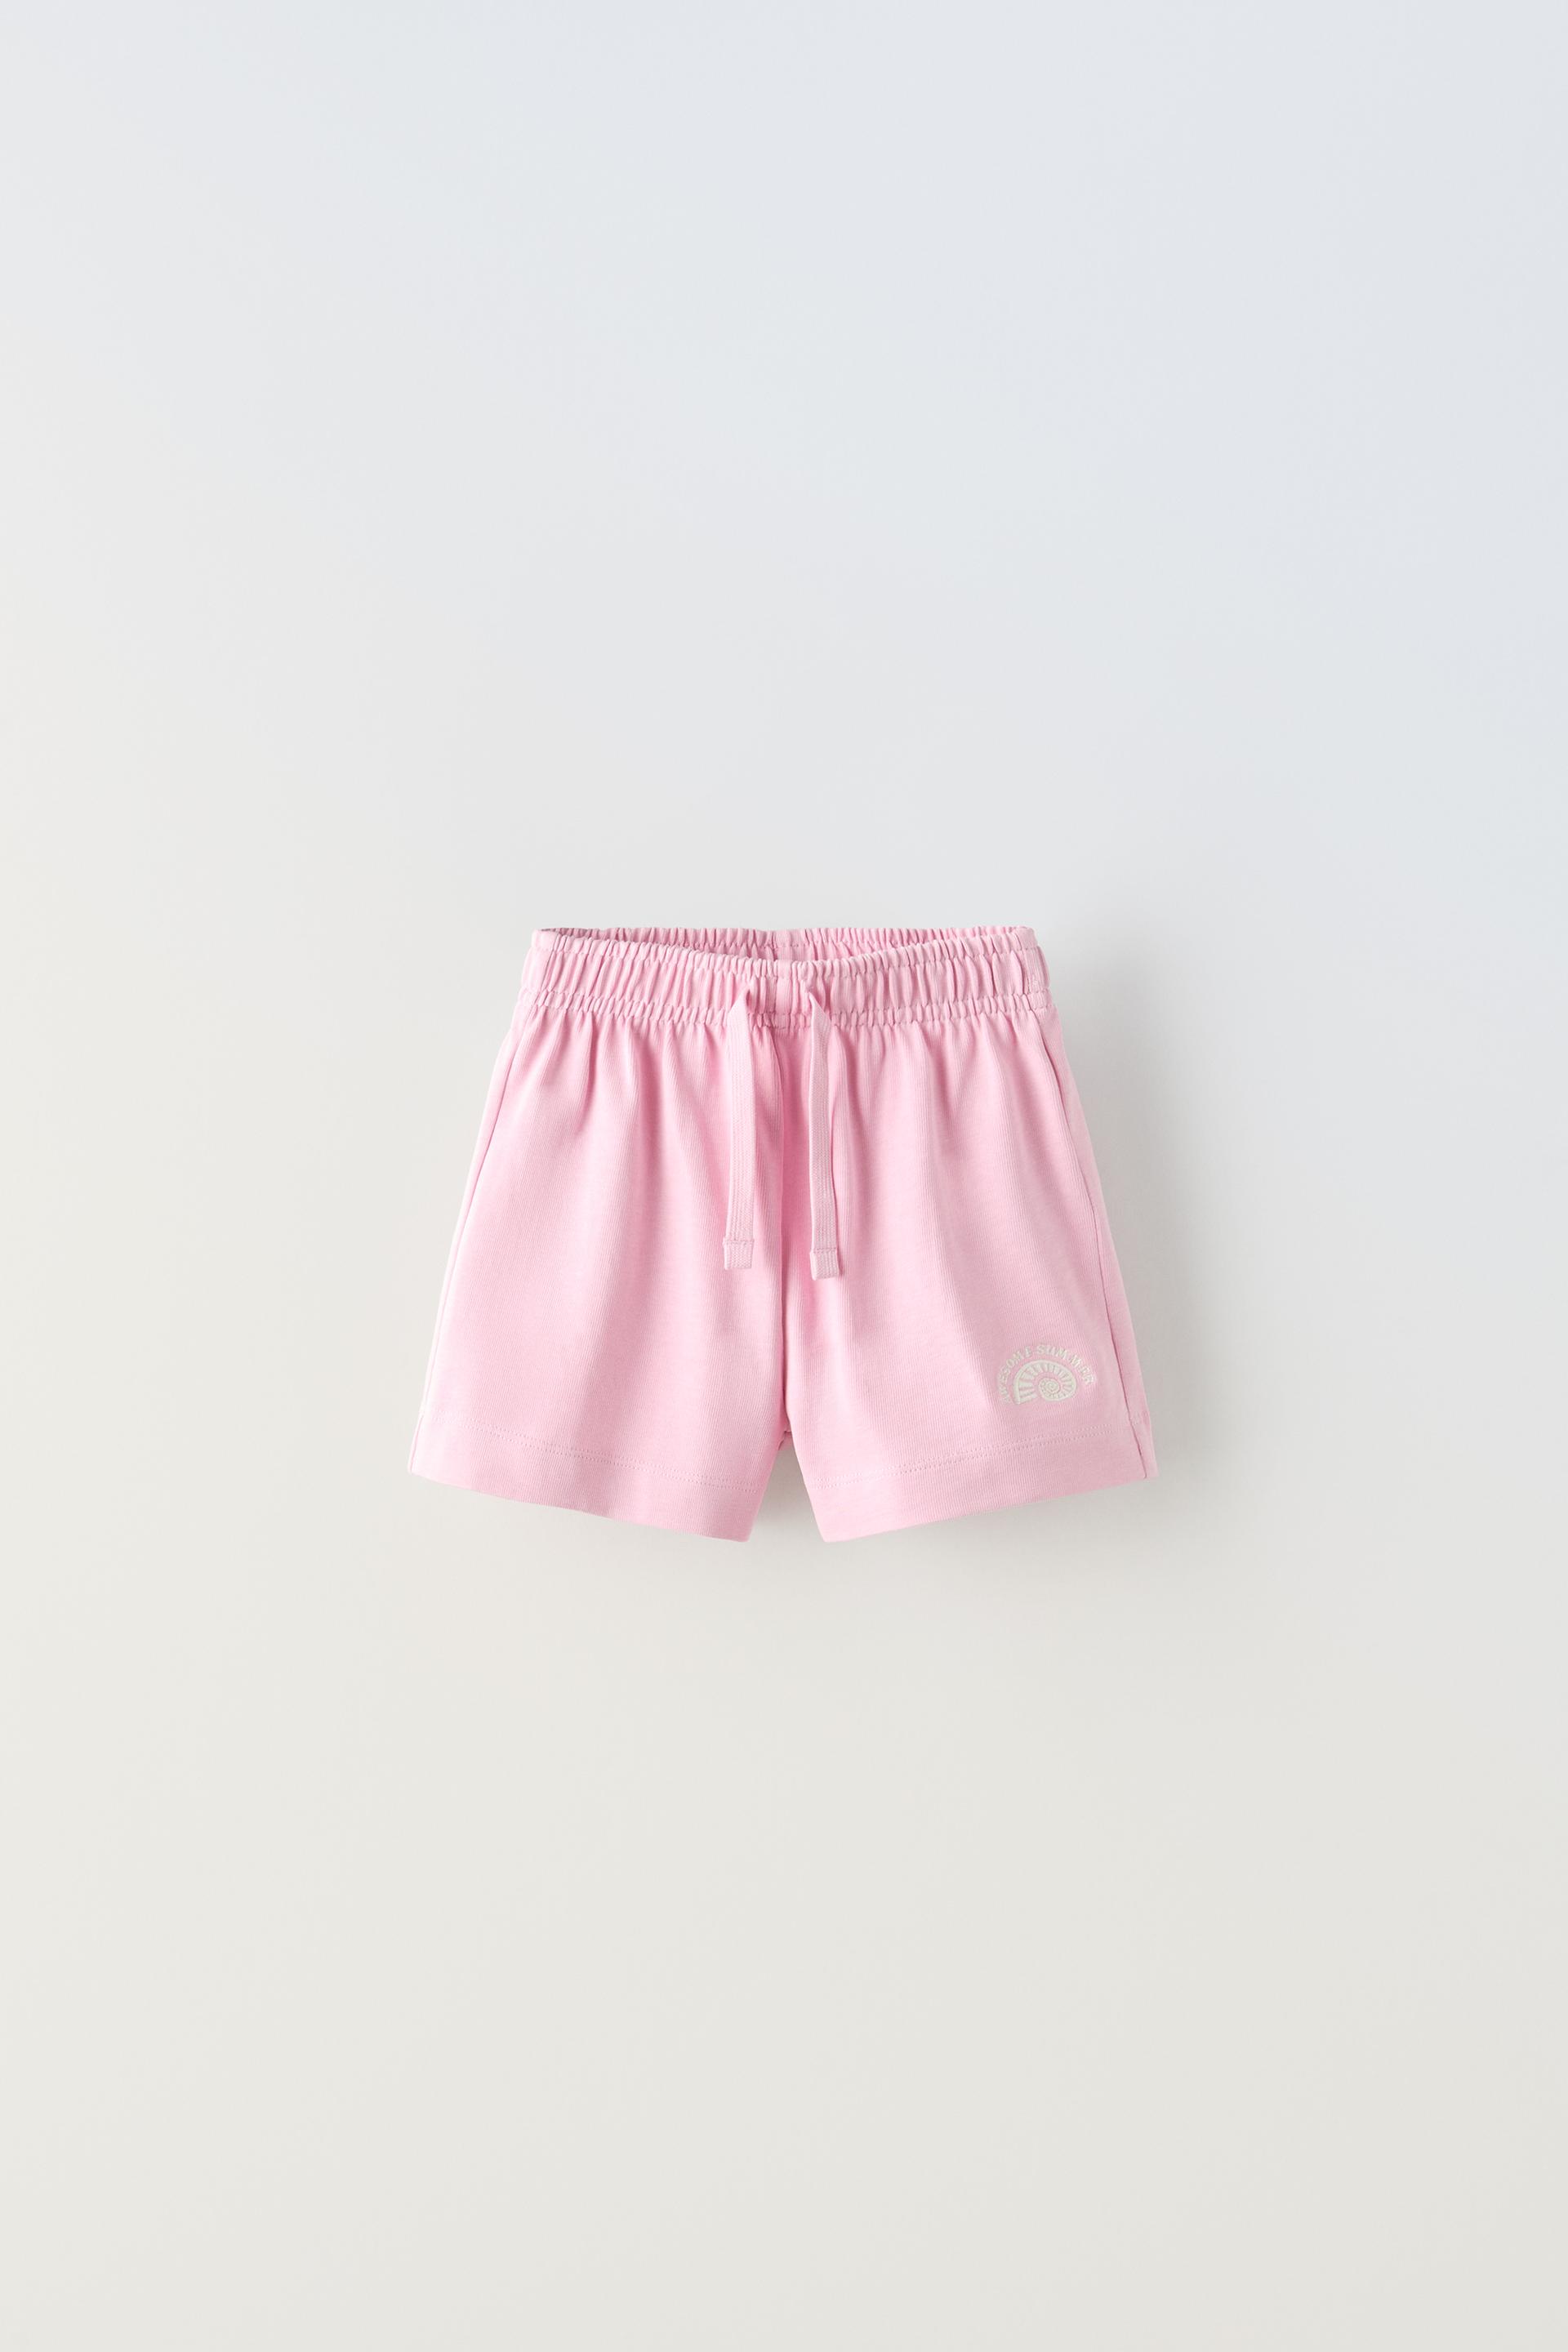 Шорты Zara Plush Bermuda, розовый шорты с аппликациями на 9 12 месяцев